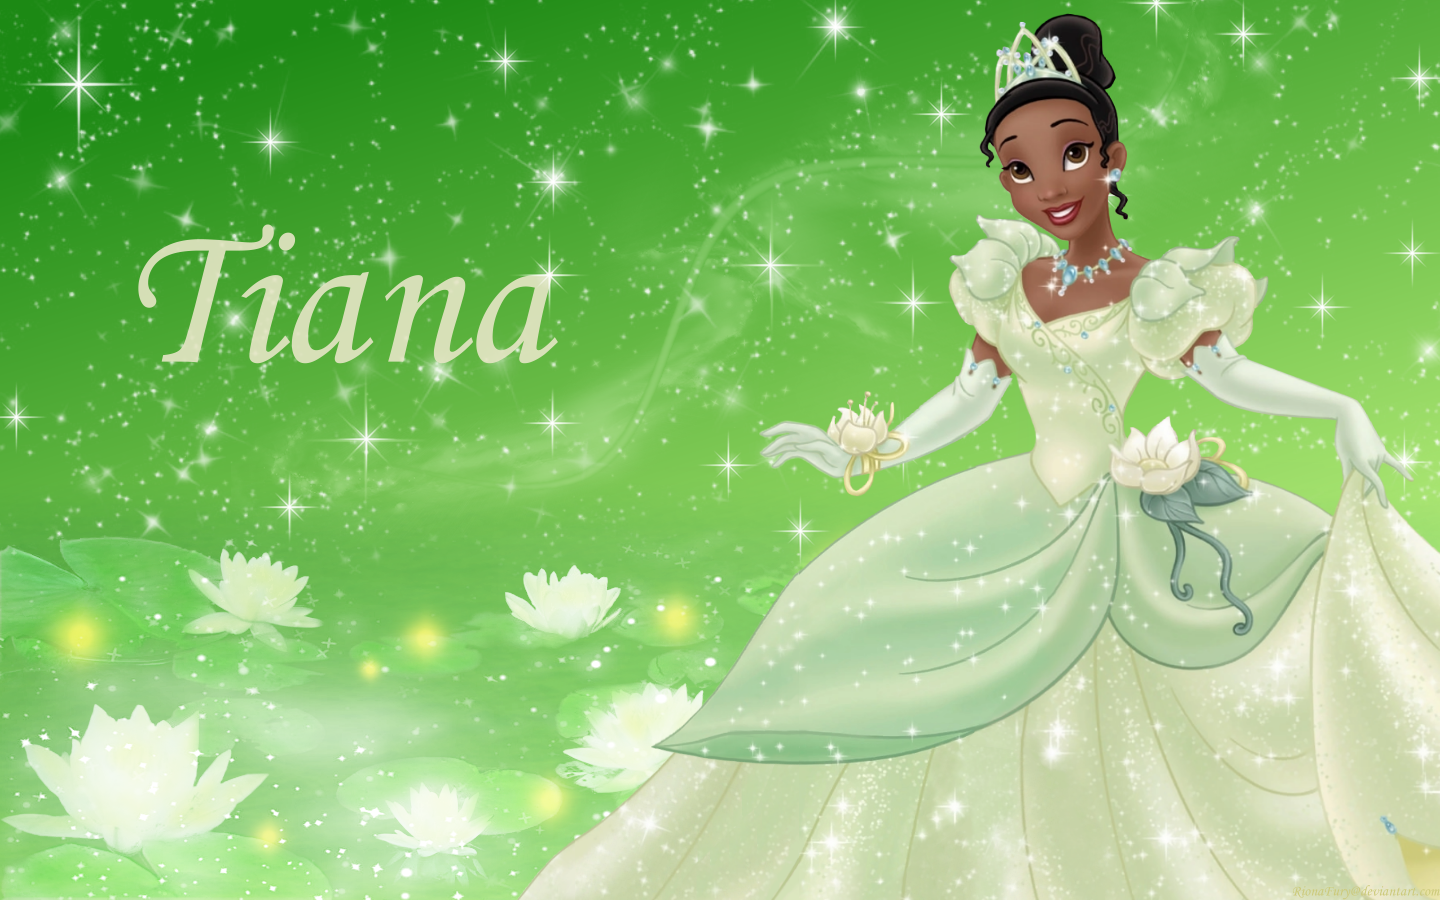 Princess Tiana - The Princess and the Frog Wallpaper (23744467 ...